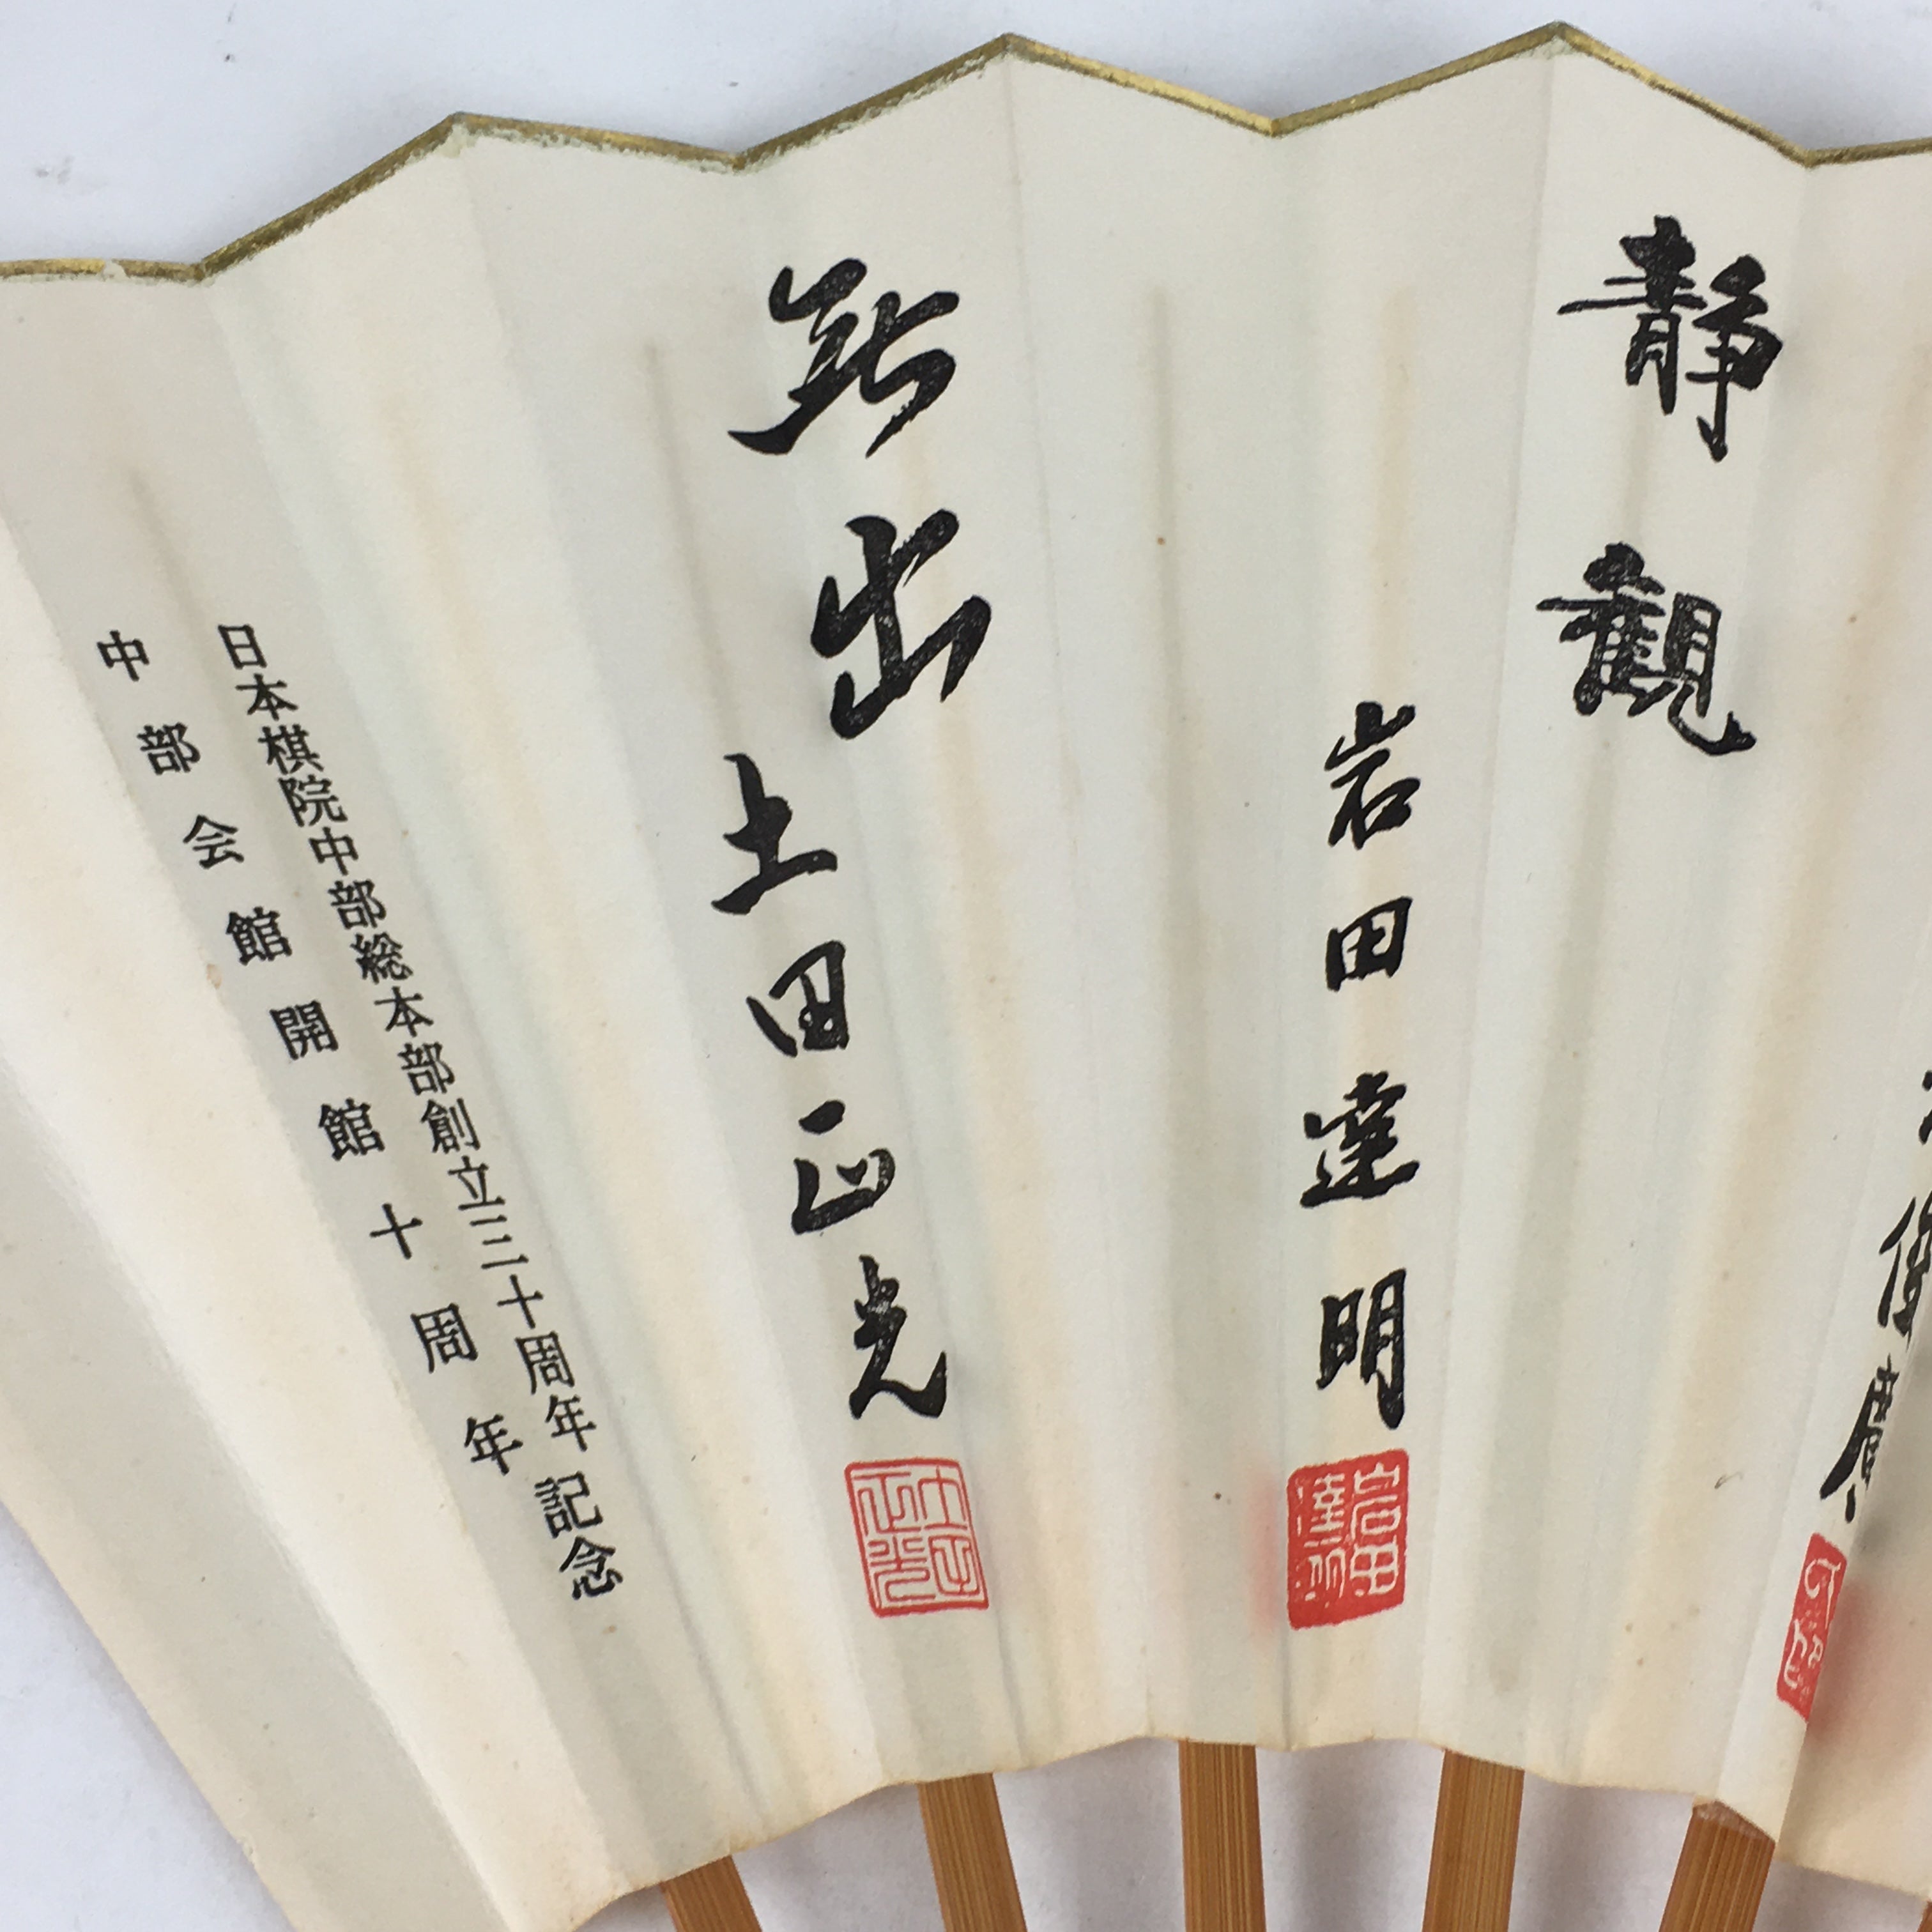 Japanese Folding Fan Vtg Sensu Bamboo Frame Paper 30th Anniversary 4D631